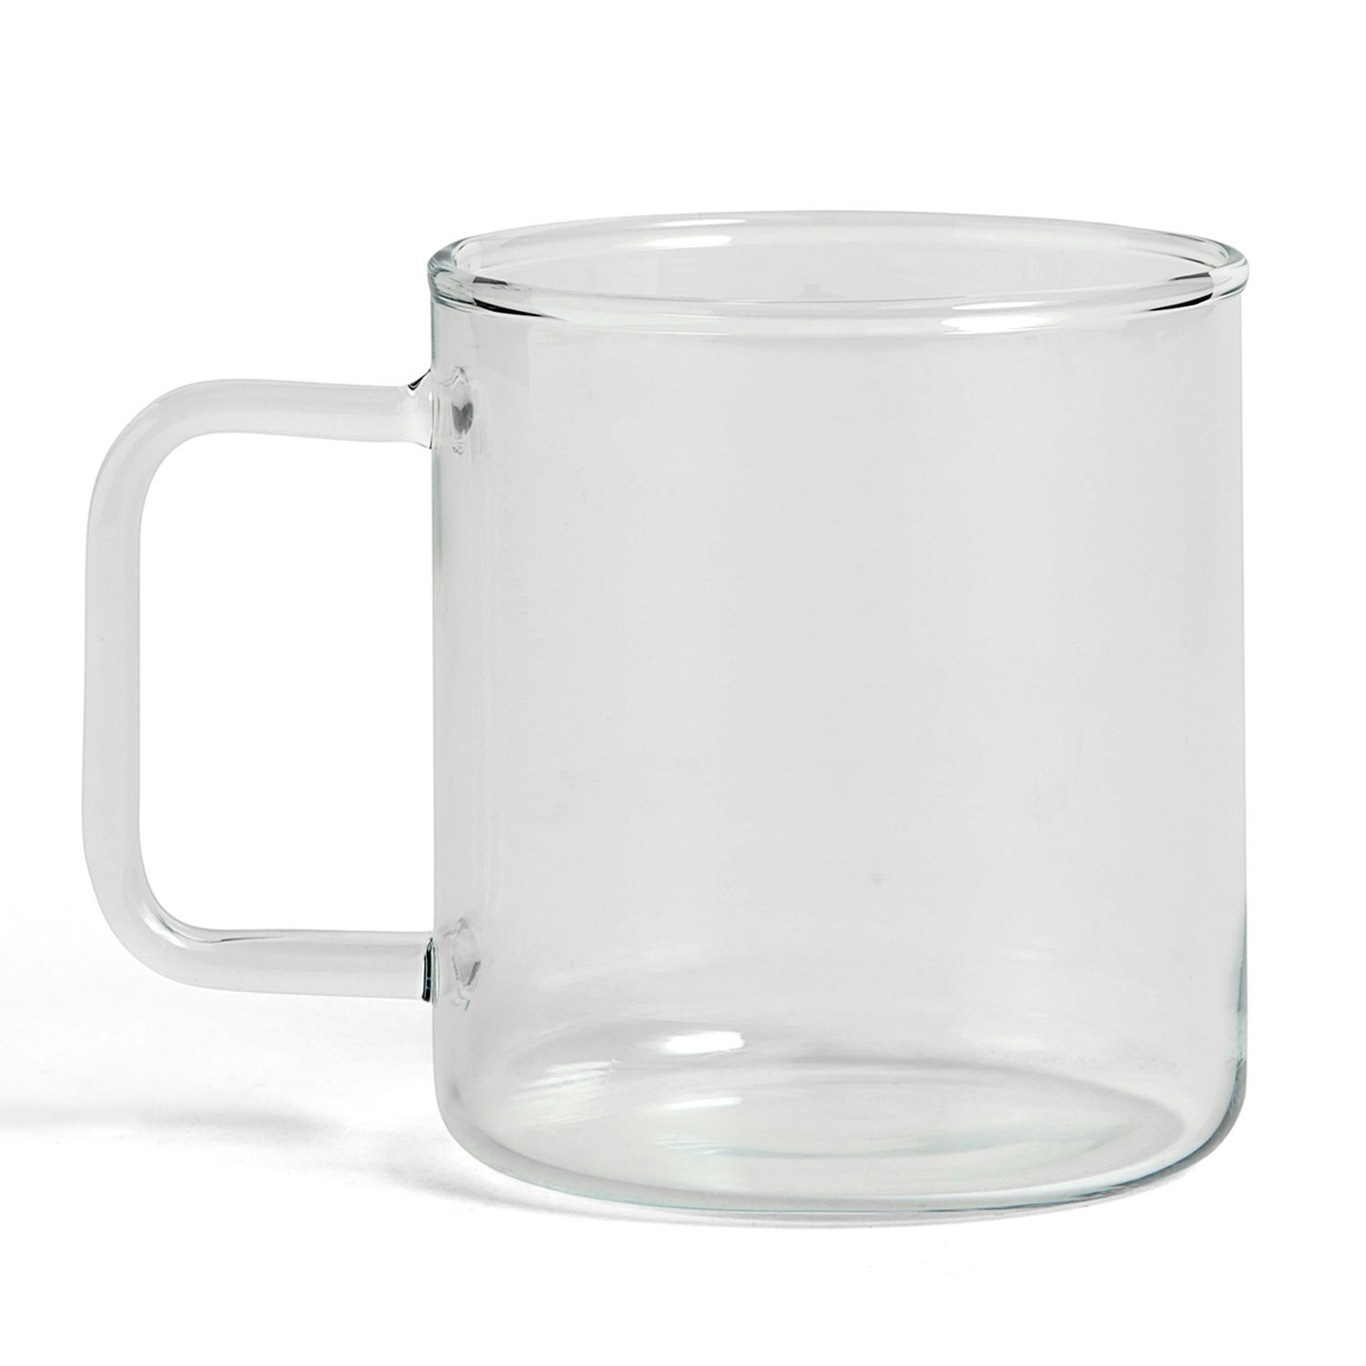 https://royaldesign.com/image/11/hay-glass-coffee-mug-m-clear-0?w=800&quality=80